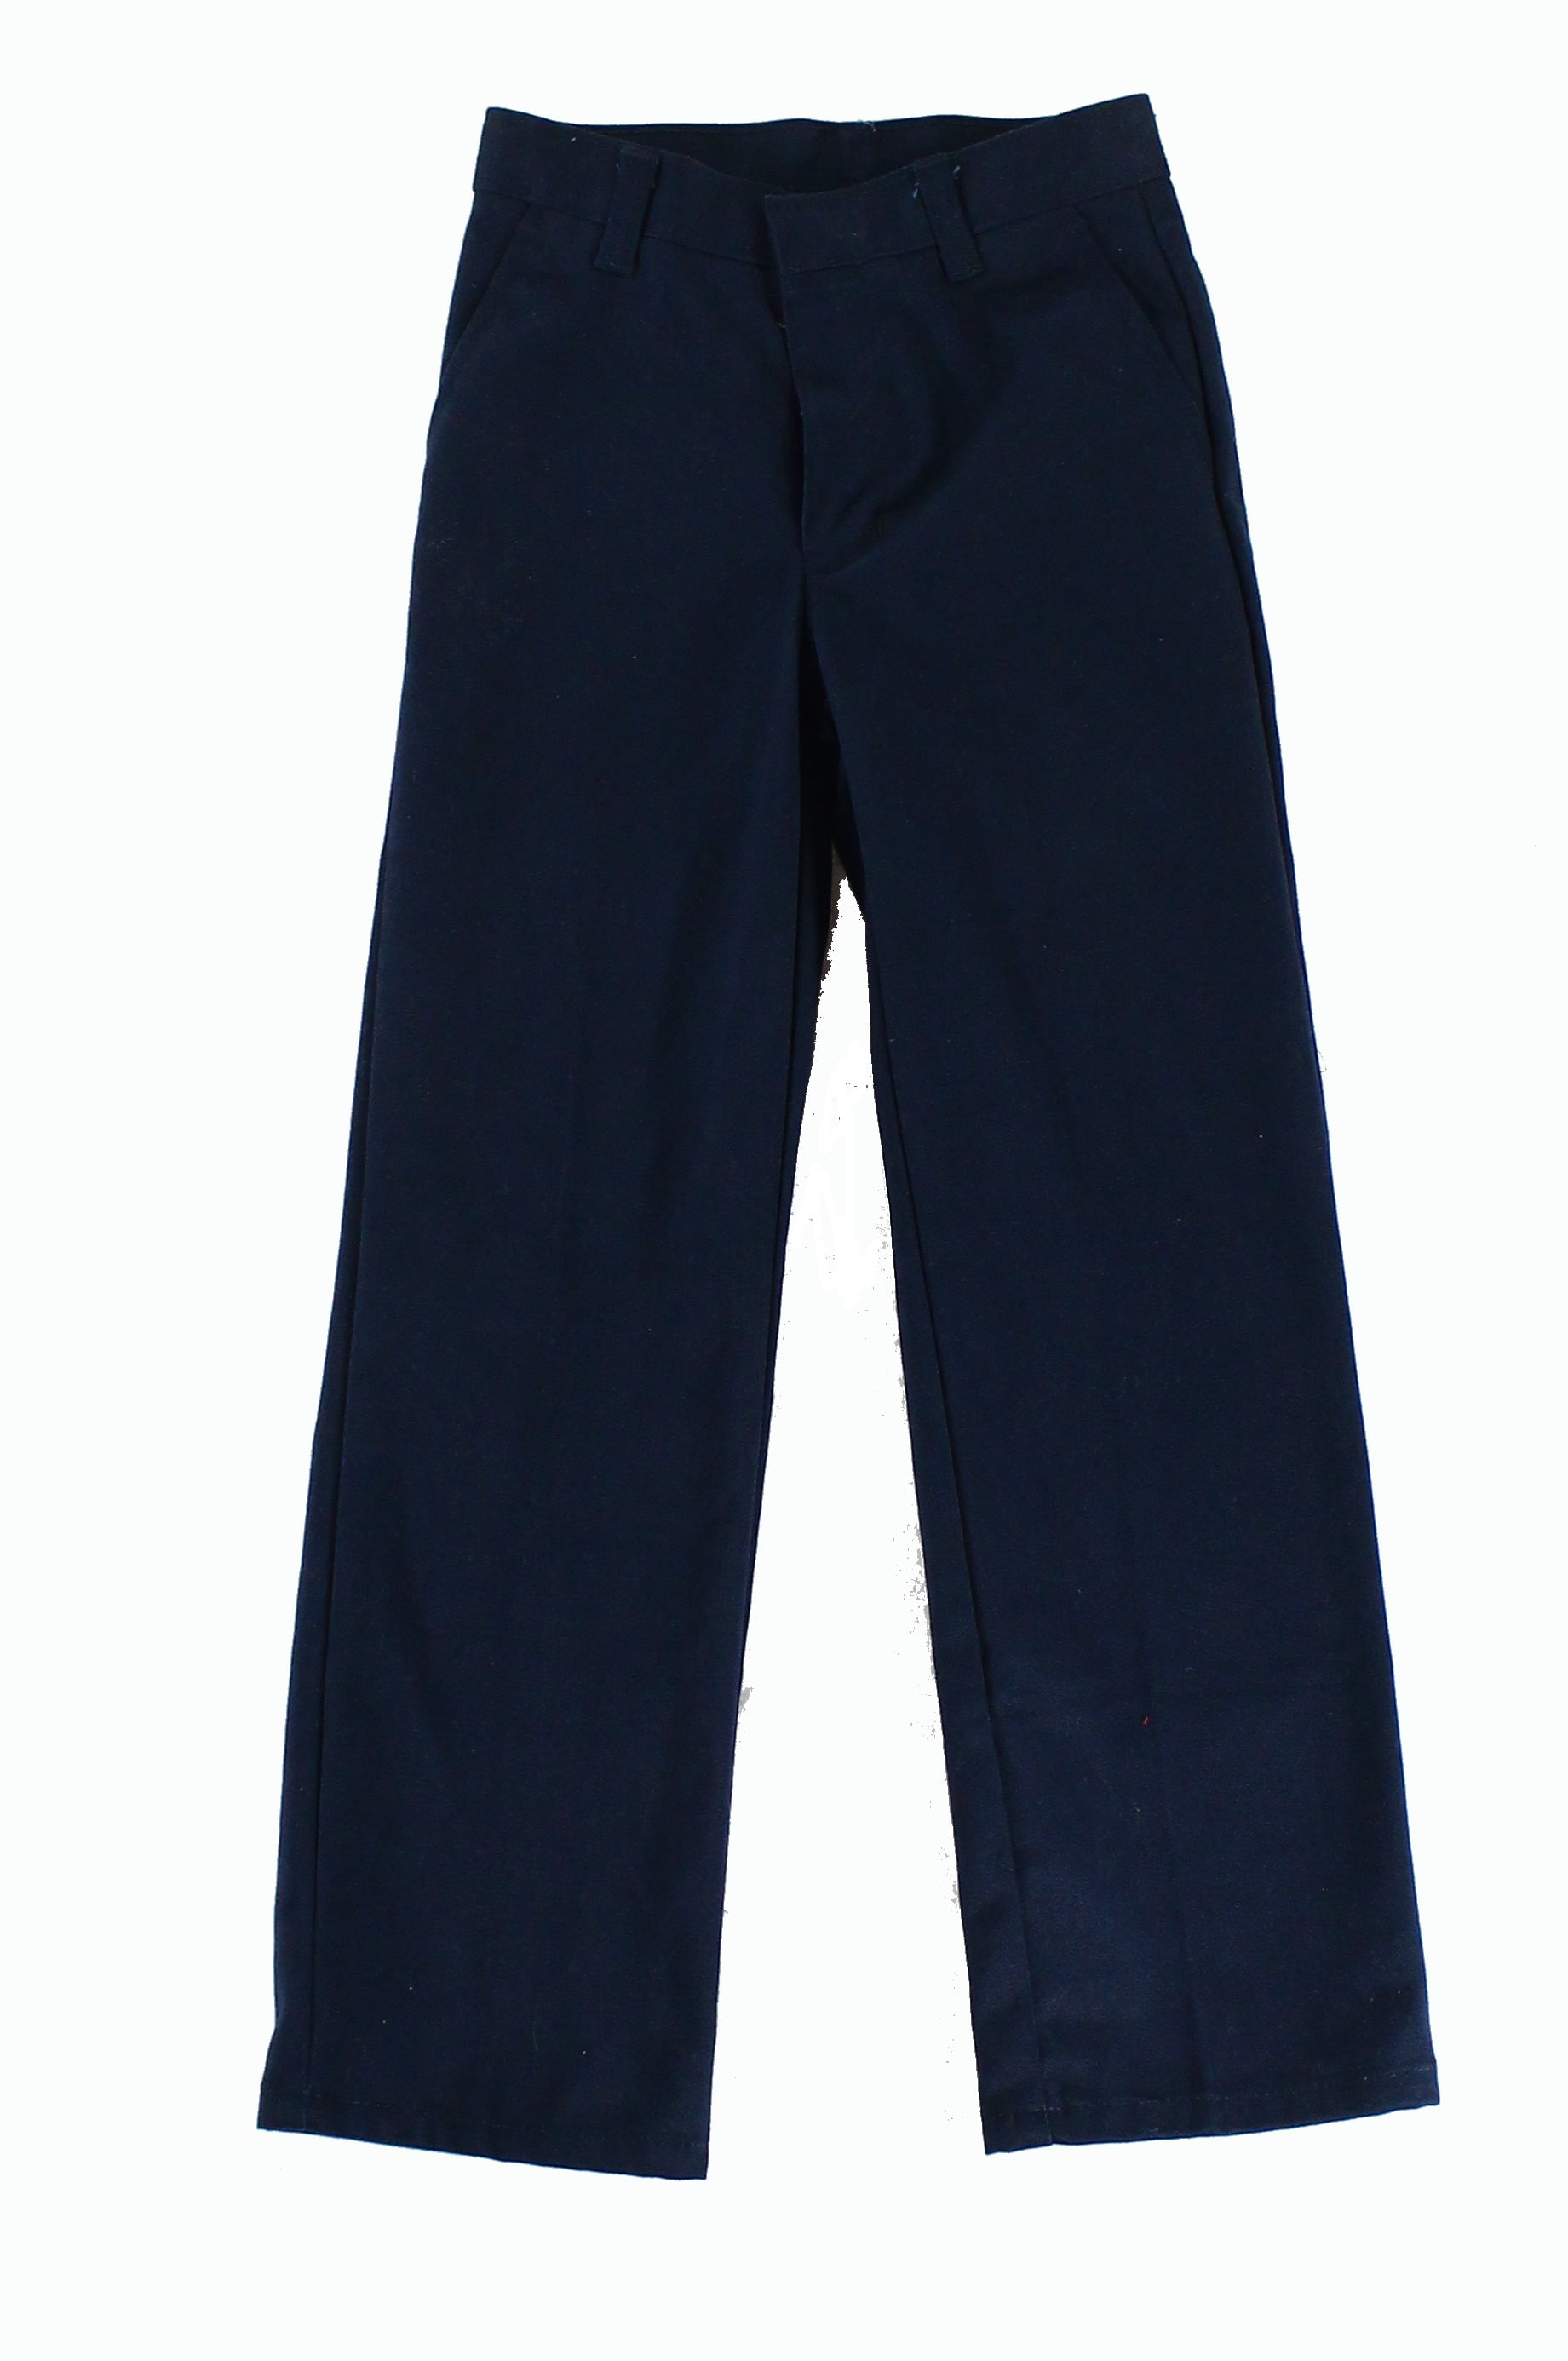 nautica-nautica-new-navy-blue-boys-size-7-slim-fit-uniform-three-pocket-pants-walmart